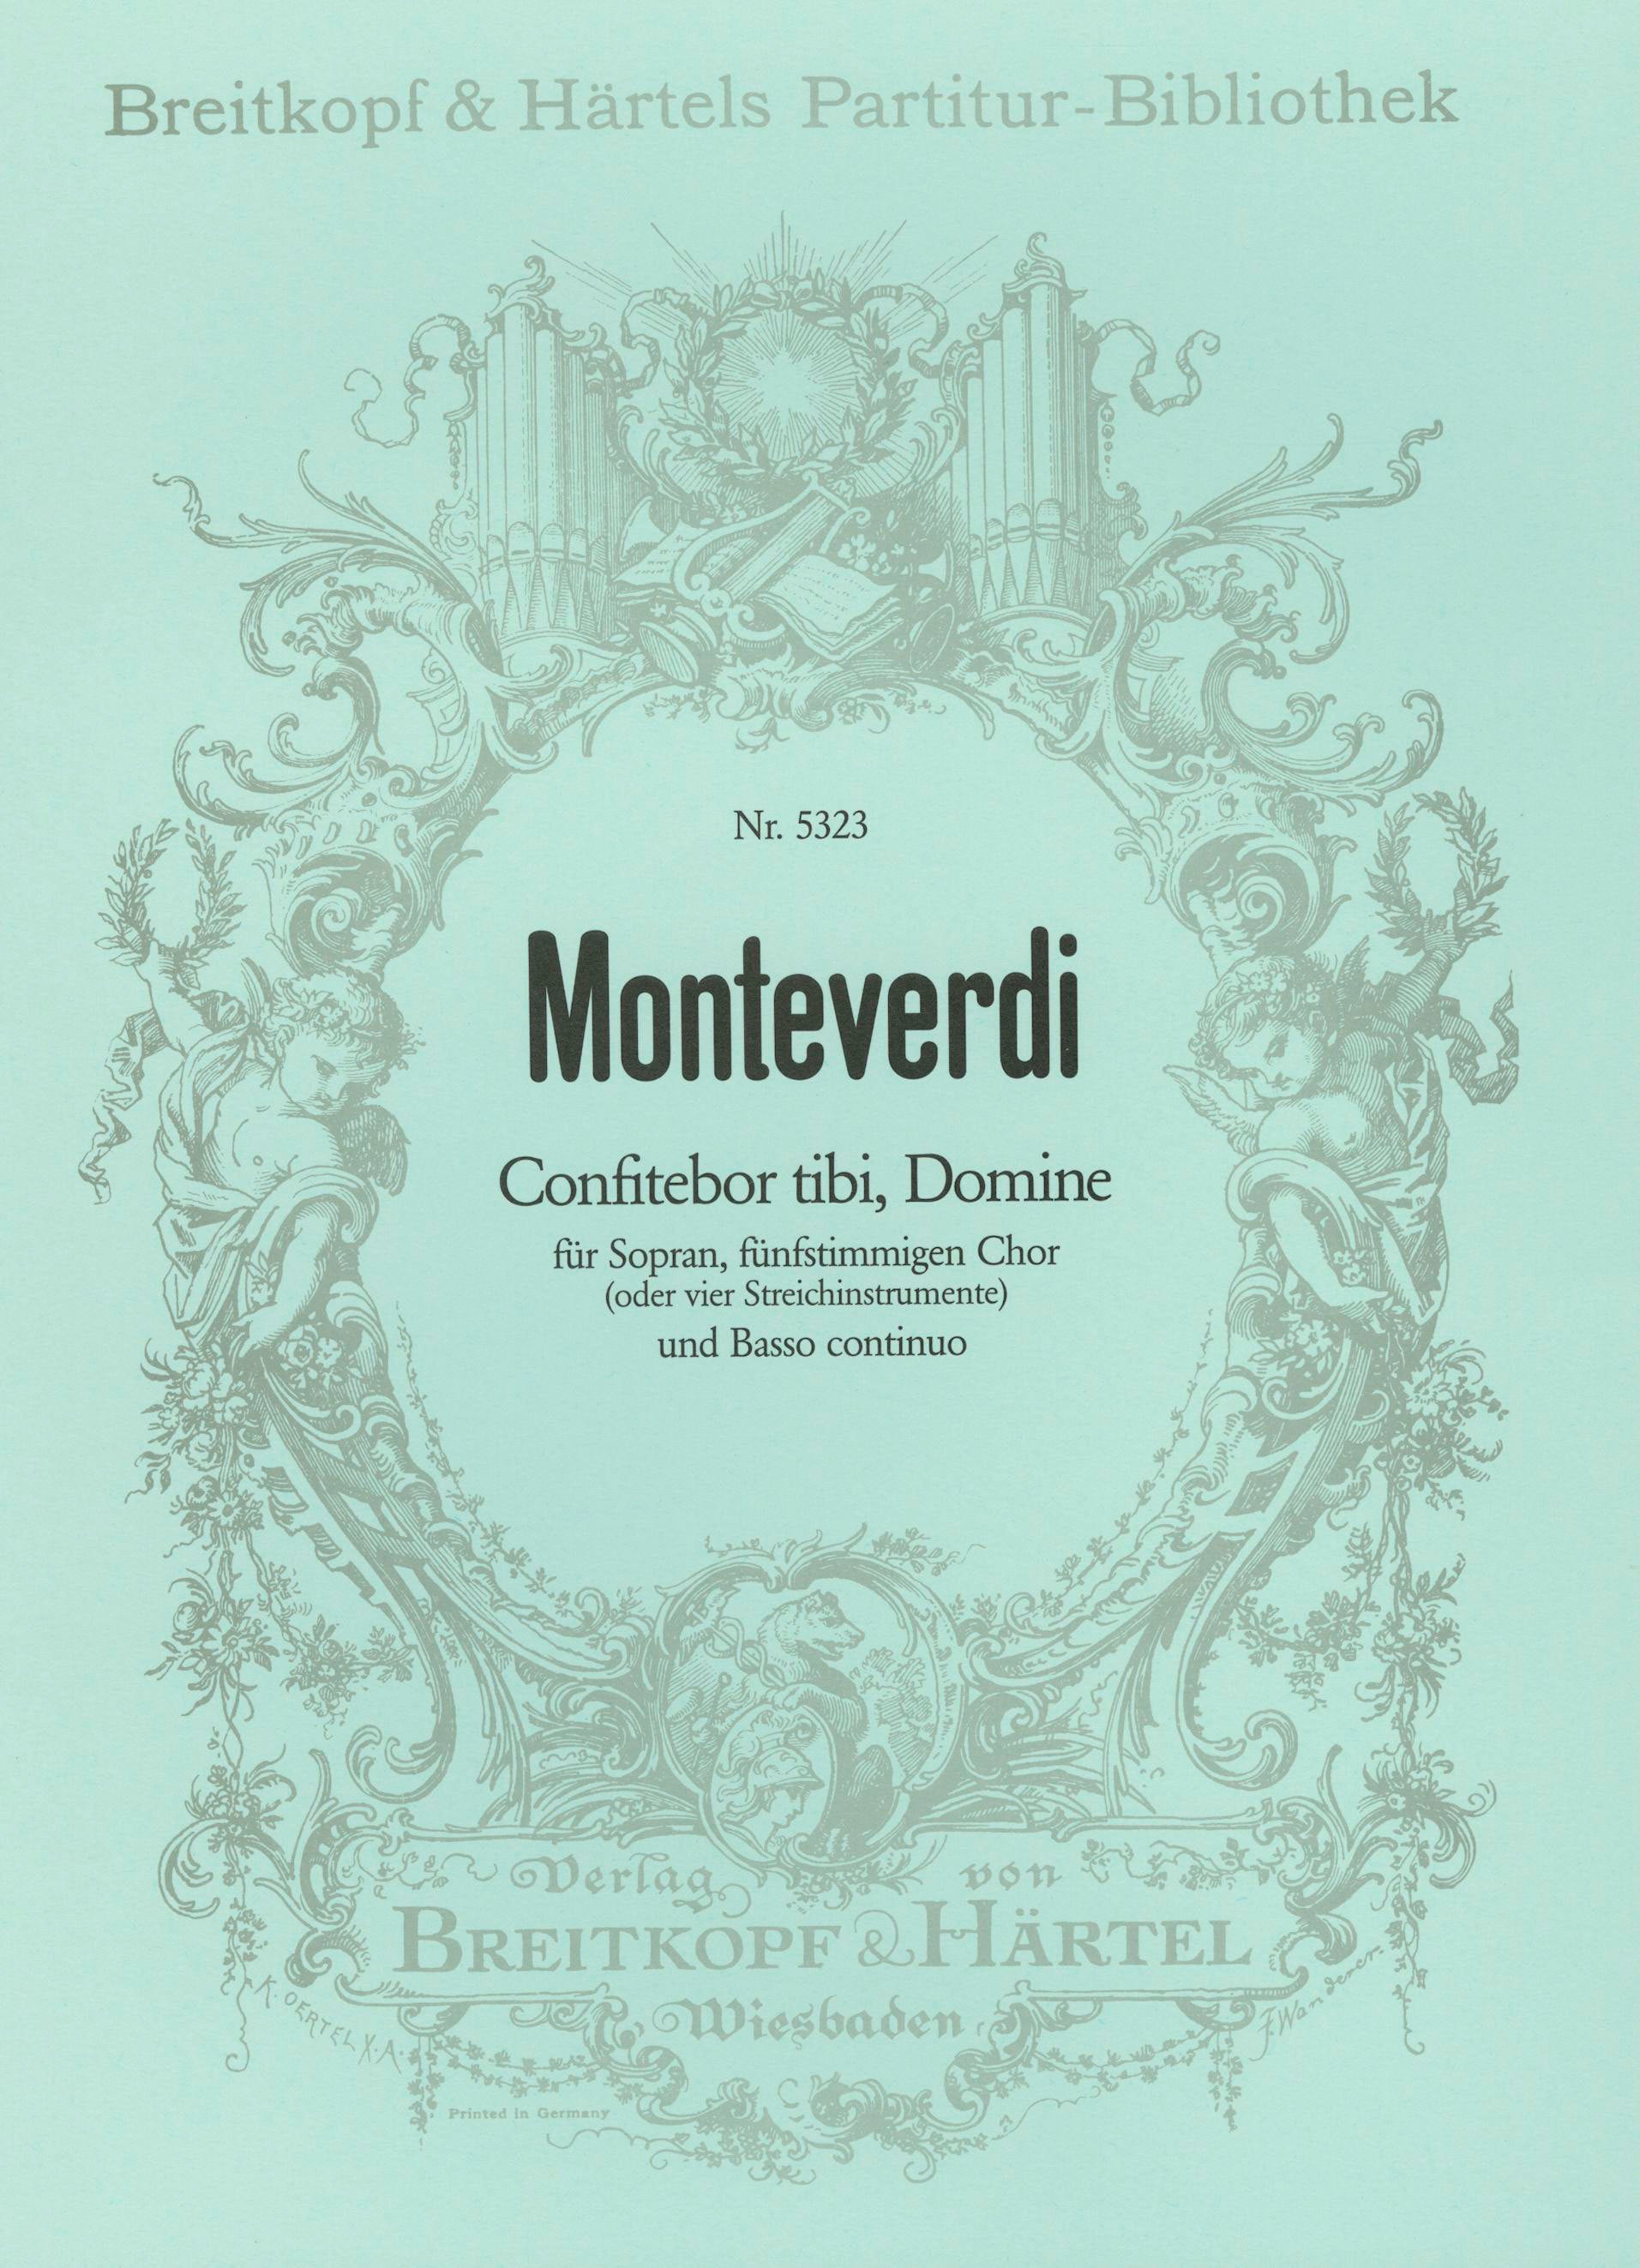 Monteverdi: Confitebor tibi, Domine, SV 296